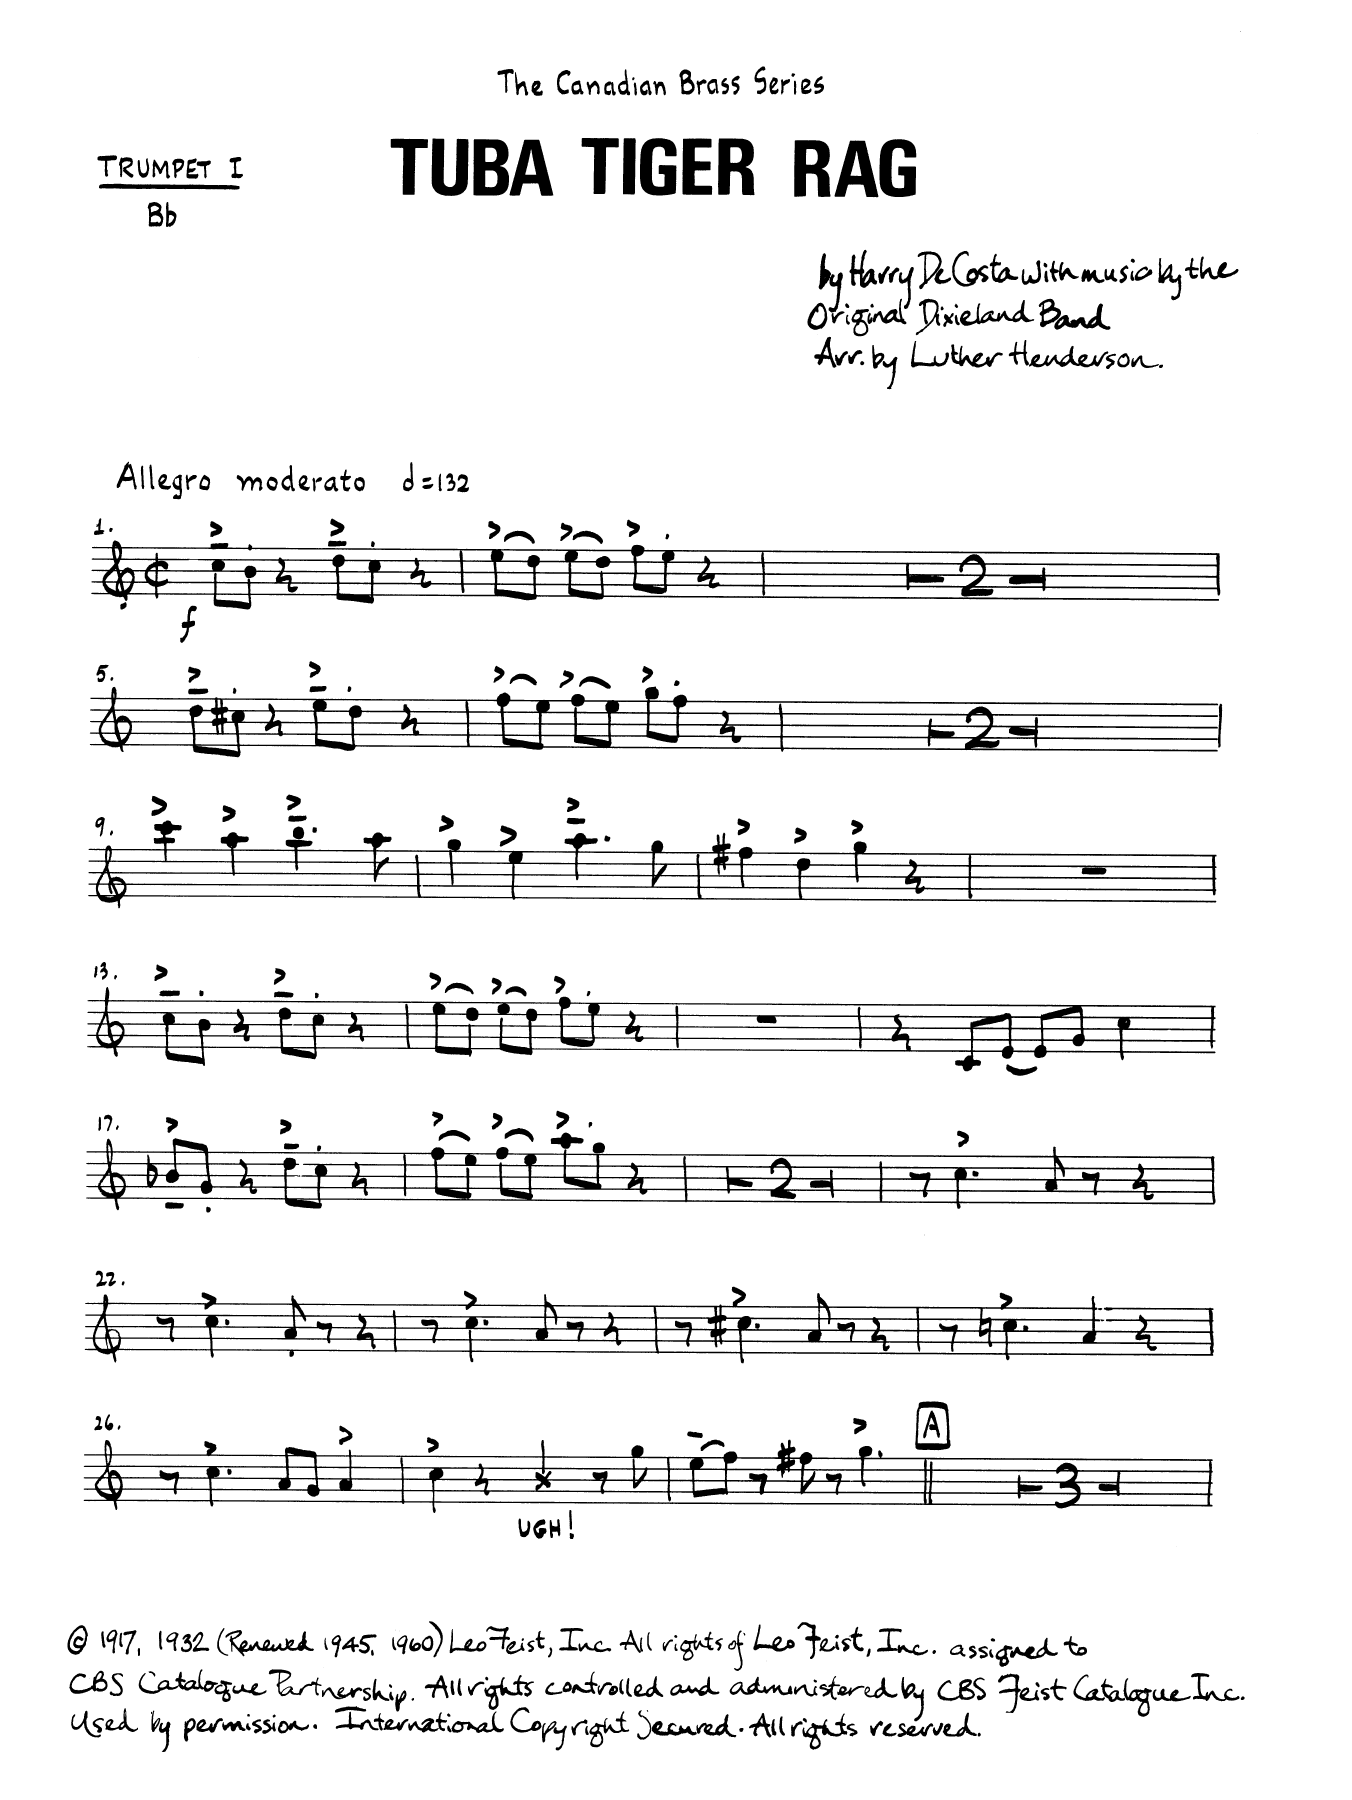 Download Luther Henderson Tuba Tiger Rag - Bb Trumpet 1 (Brass Qu Sheet Music